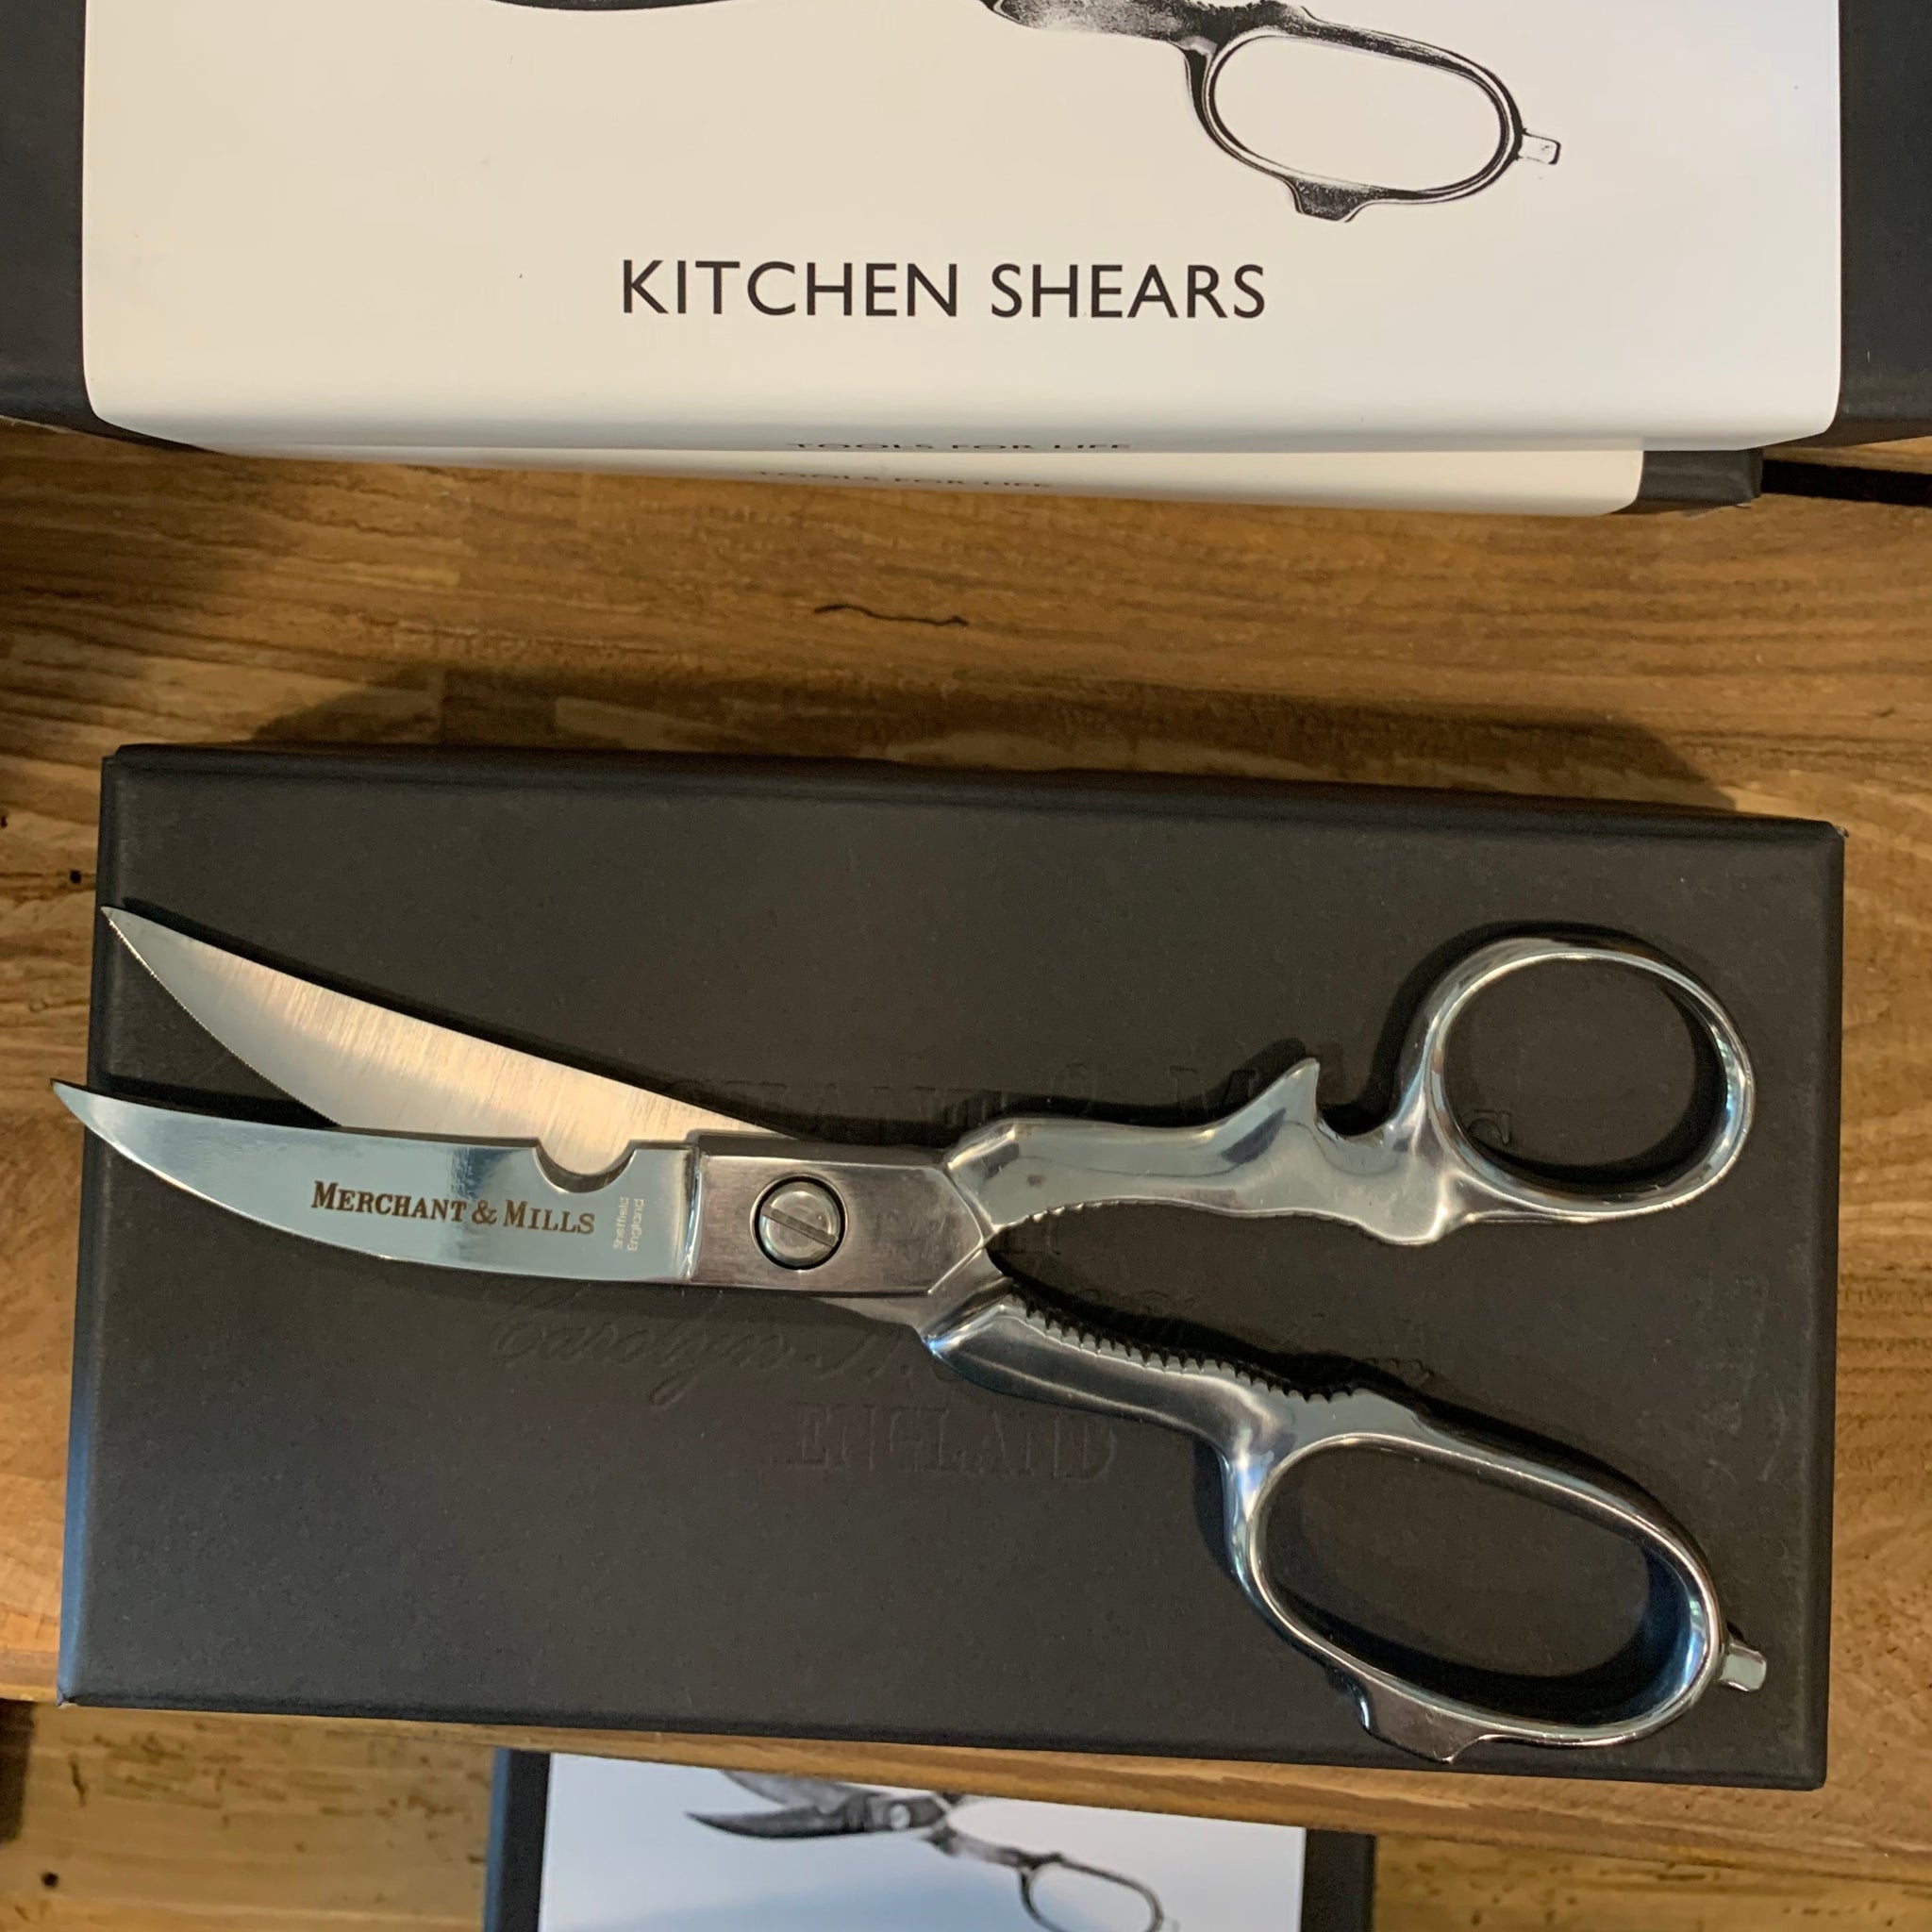 Merchant and Mills Household Scissors